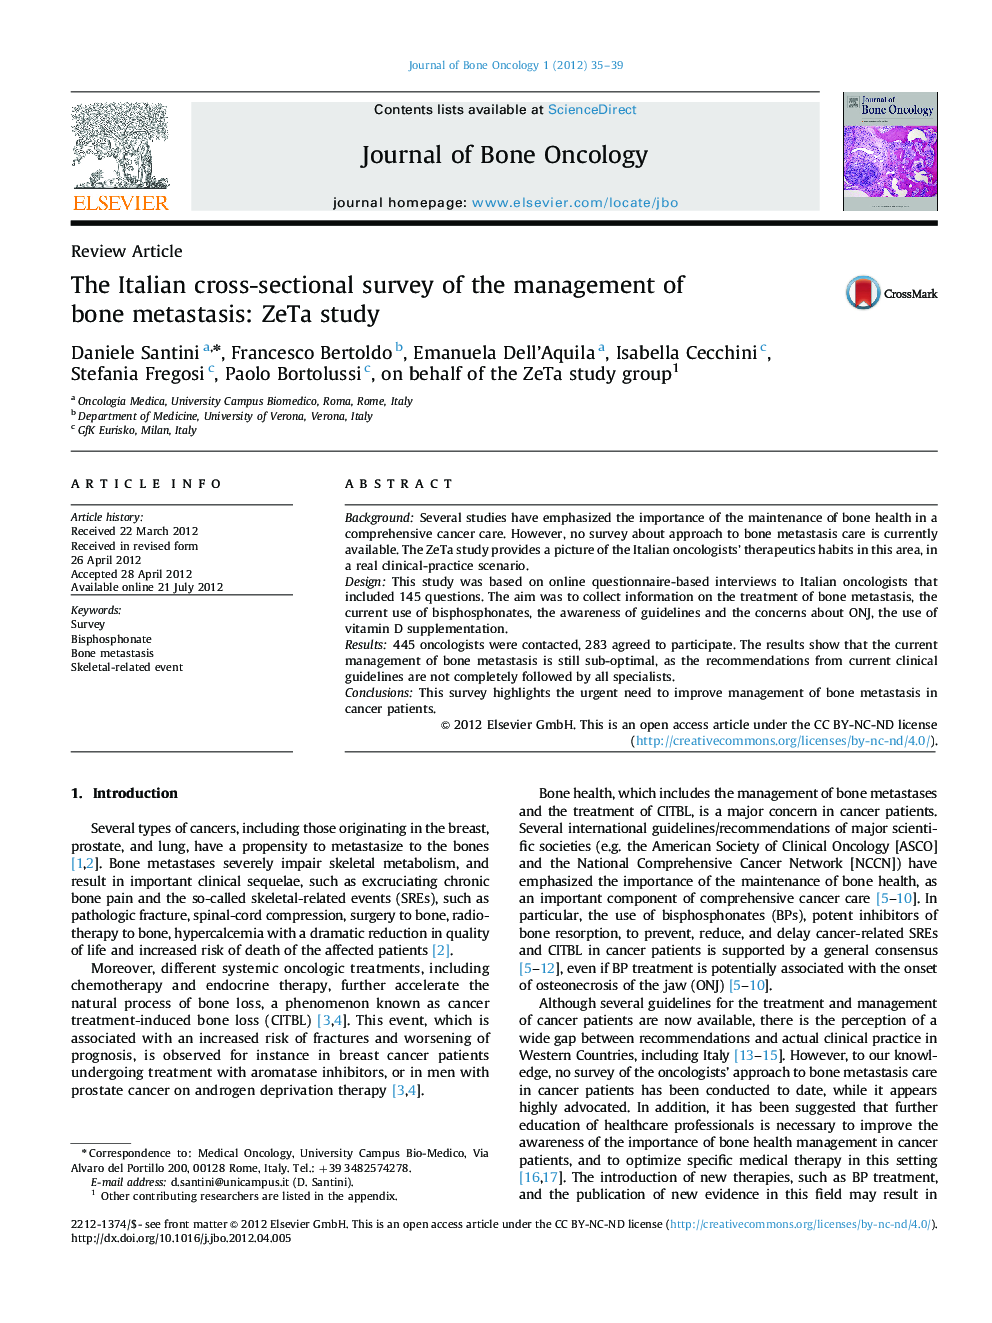 The Italian cross-sectional survey of the management of bone metastasis: ZeTa study